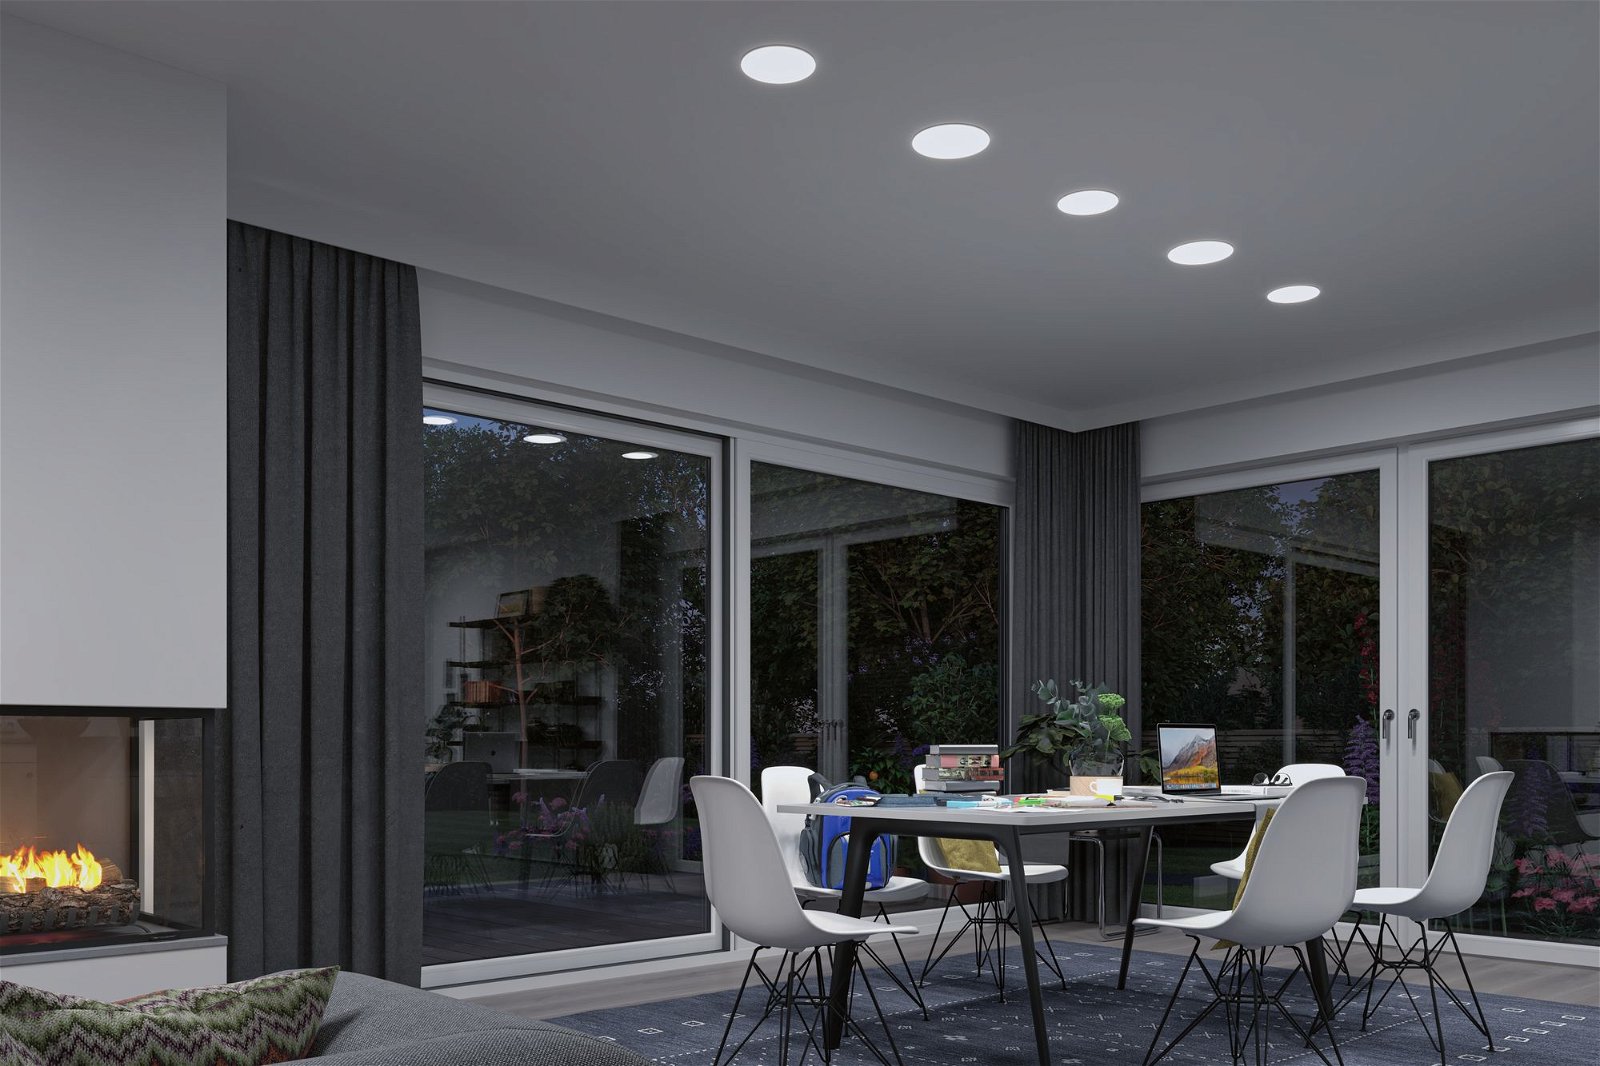 VariFit LED Recessed panel Smart Home Zigbee Veluna IP44 round 215mm Tunable White Satin